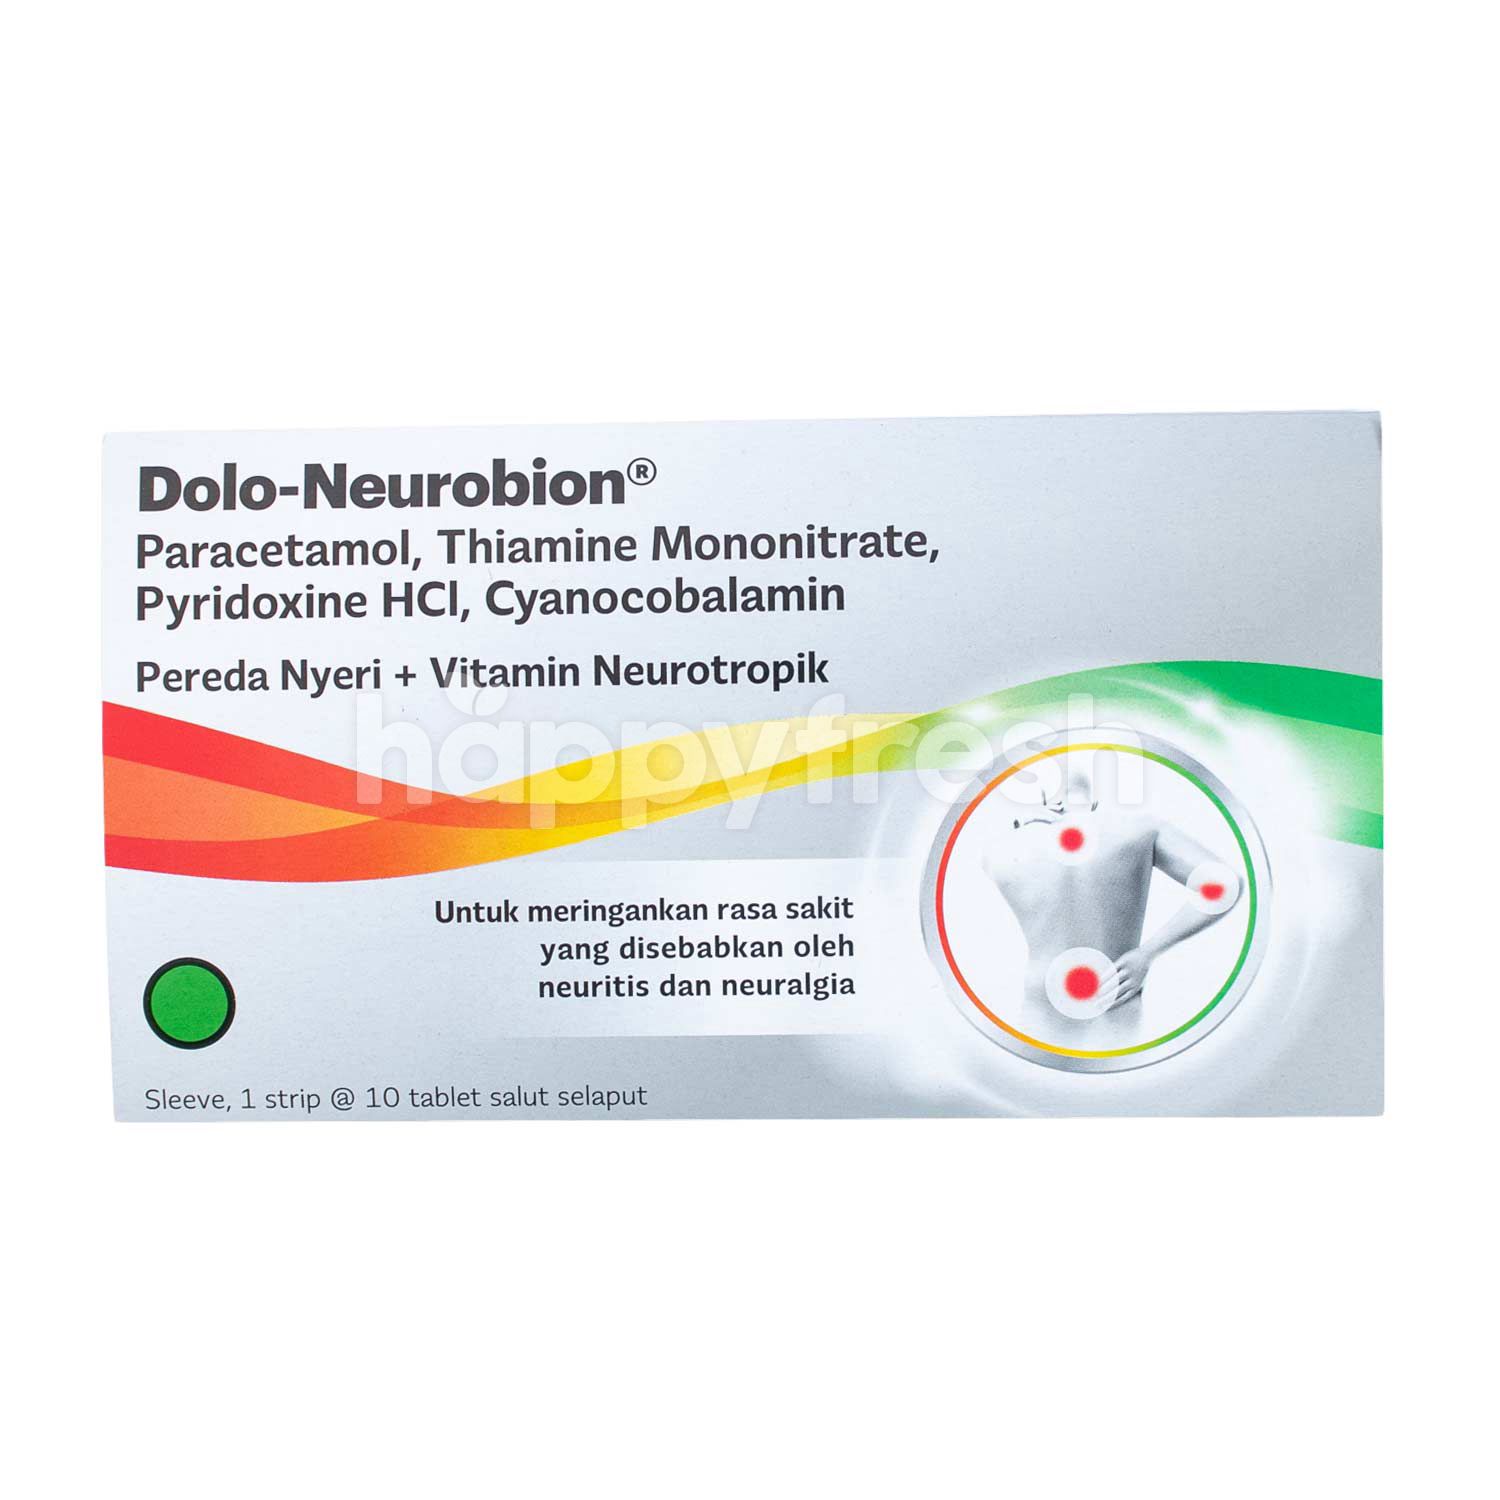 Jual Dolo-Neurobion Pain Relieve + Neurotropic Vitamin di Grand Lucky - Hap...